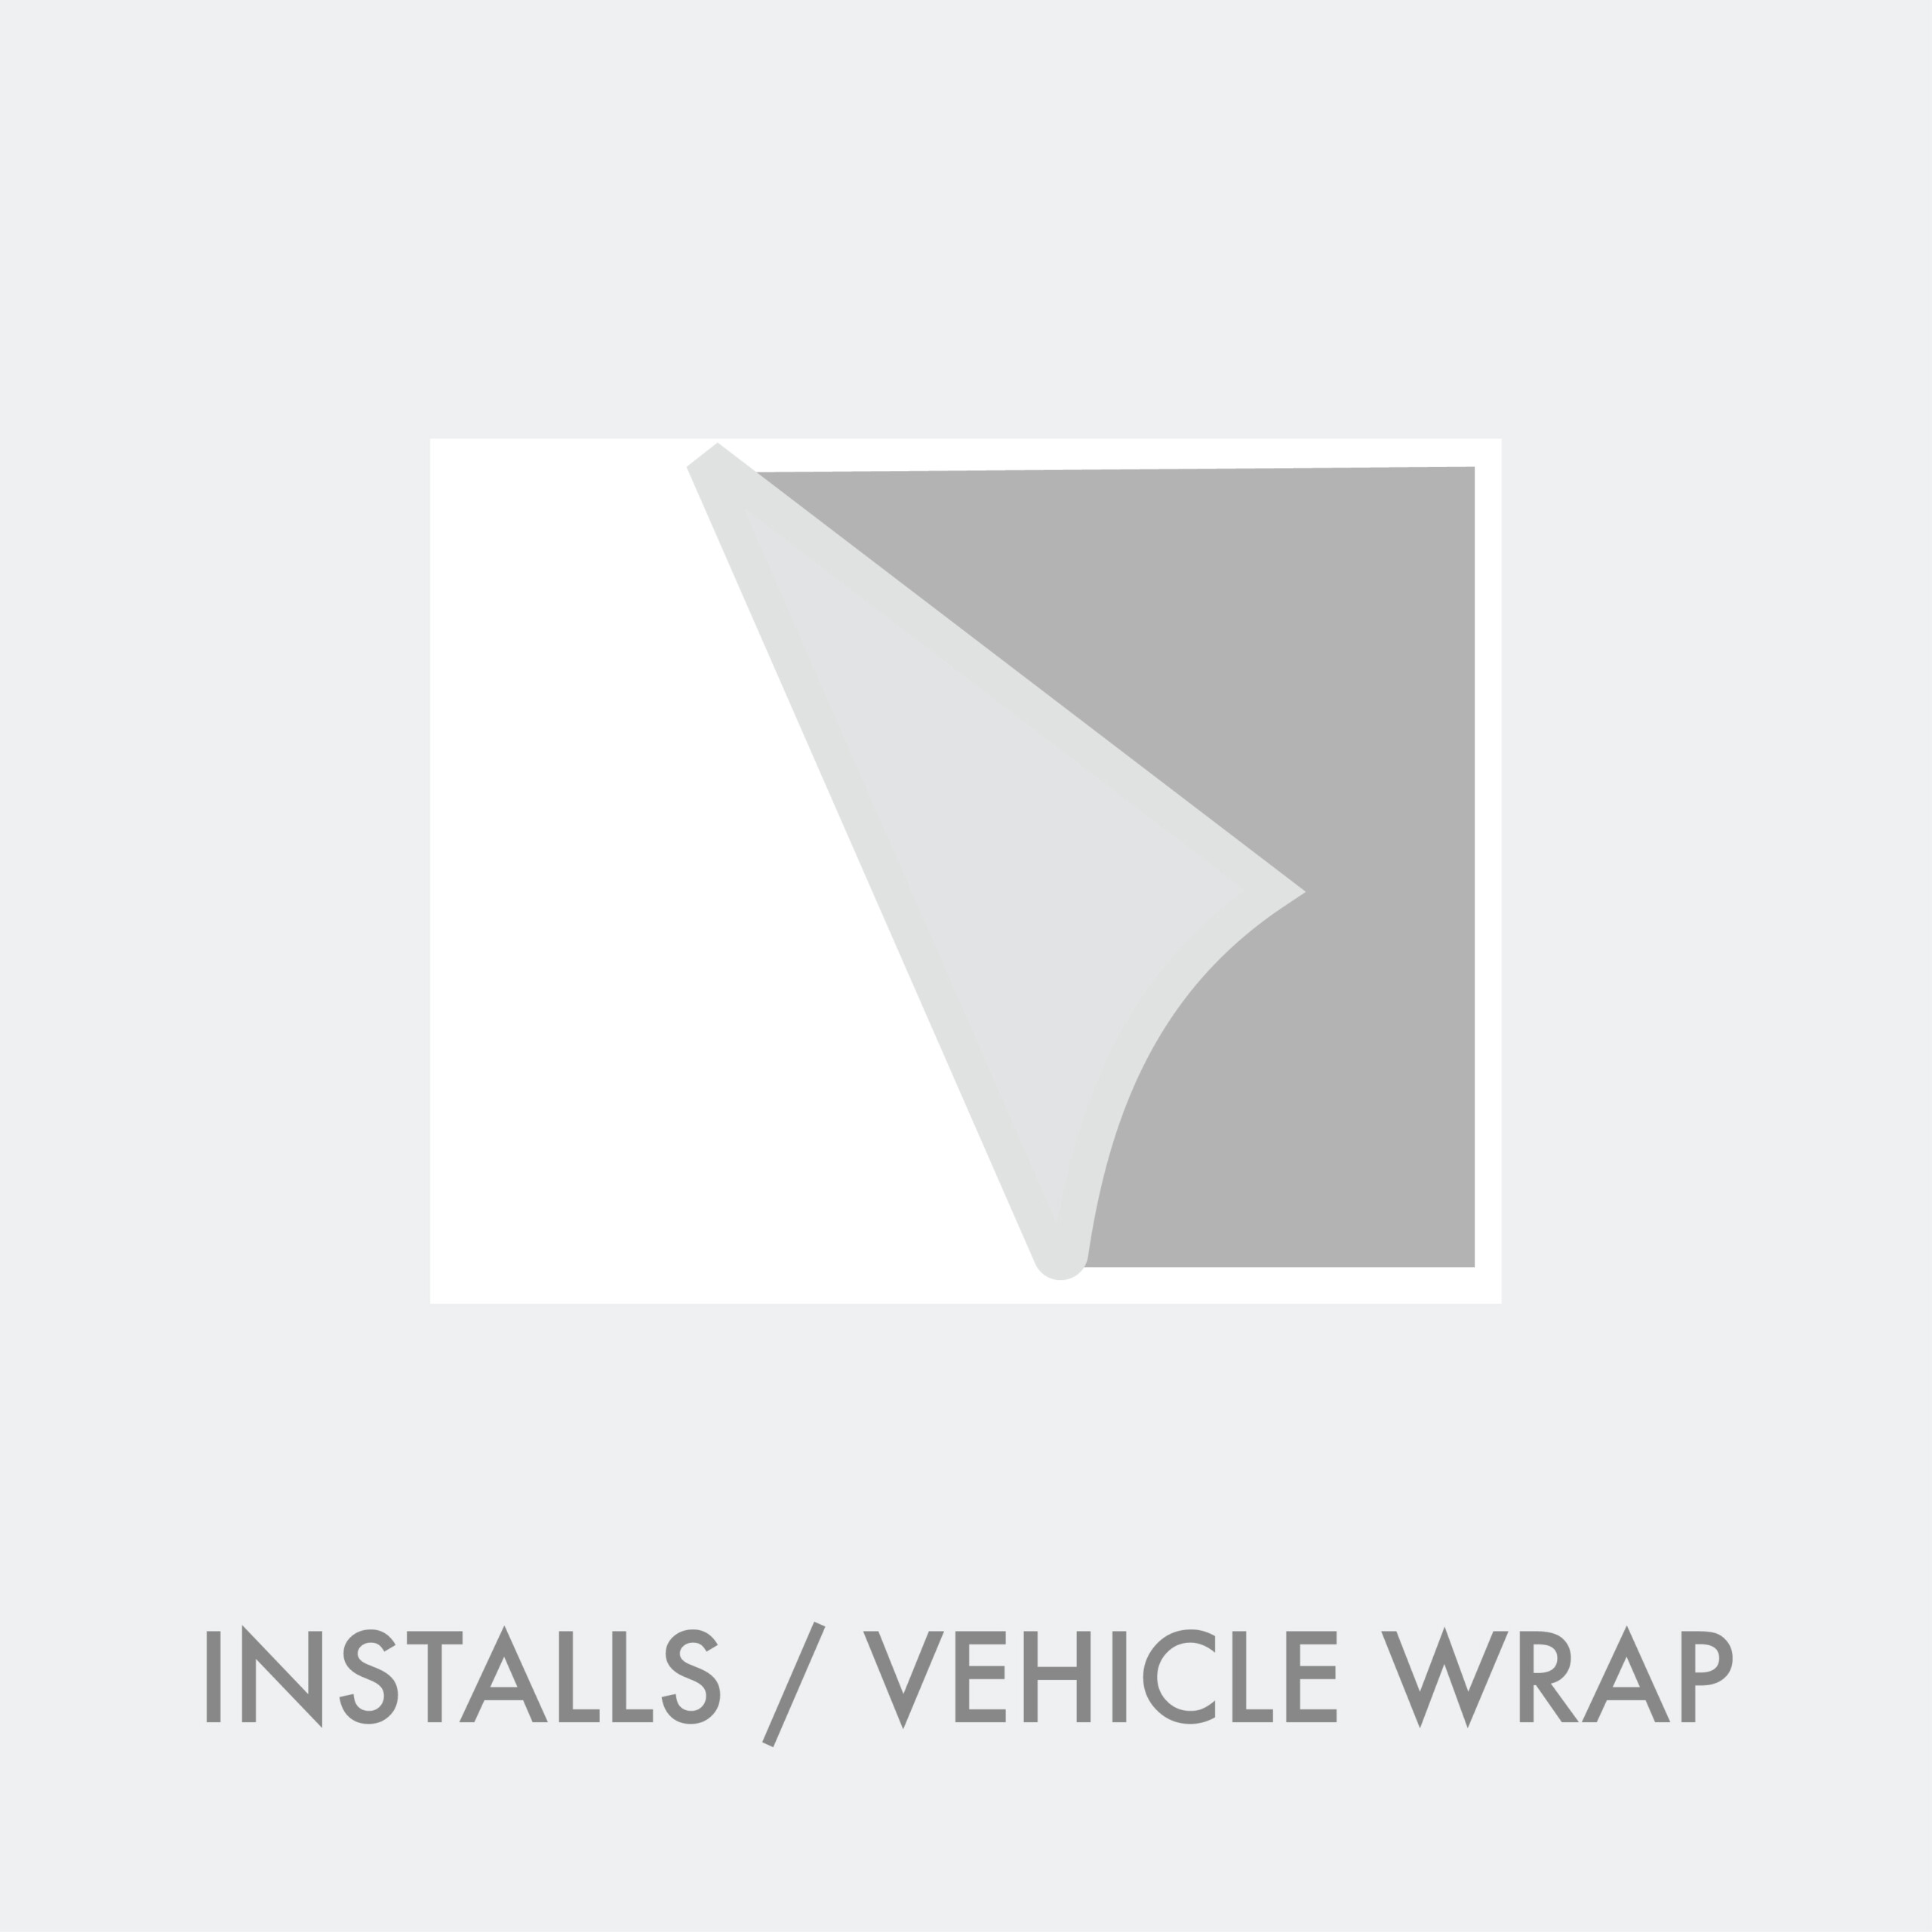 Installs / Vehicle Wrap